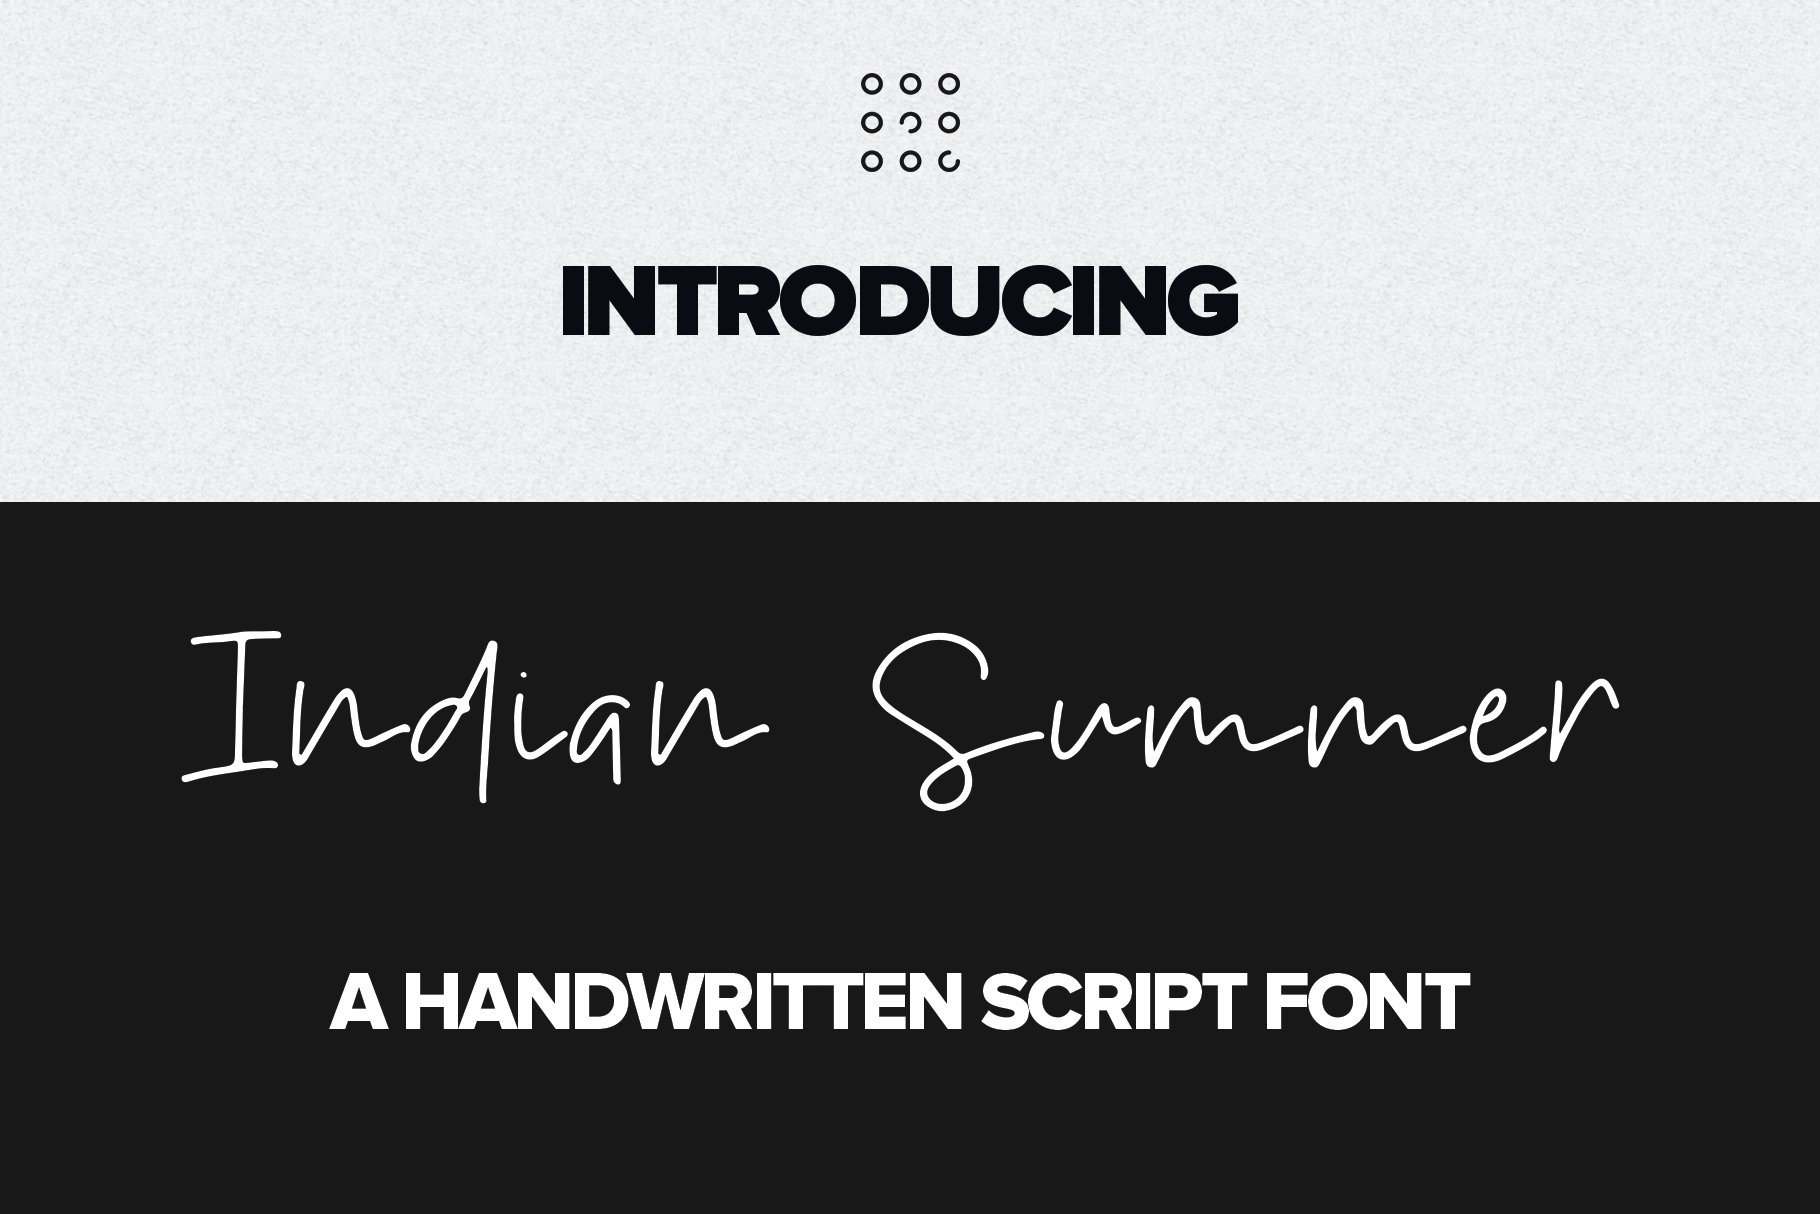 Indian Summer Handwritten font cover image.